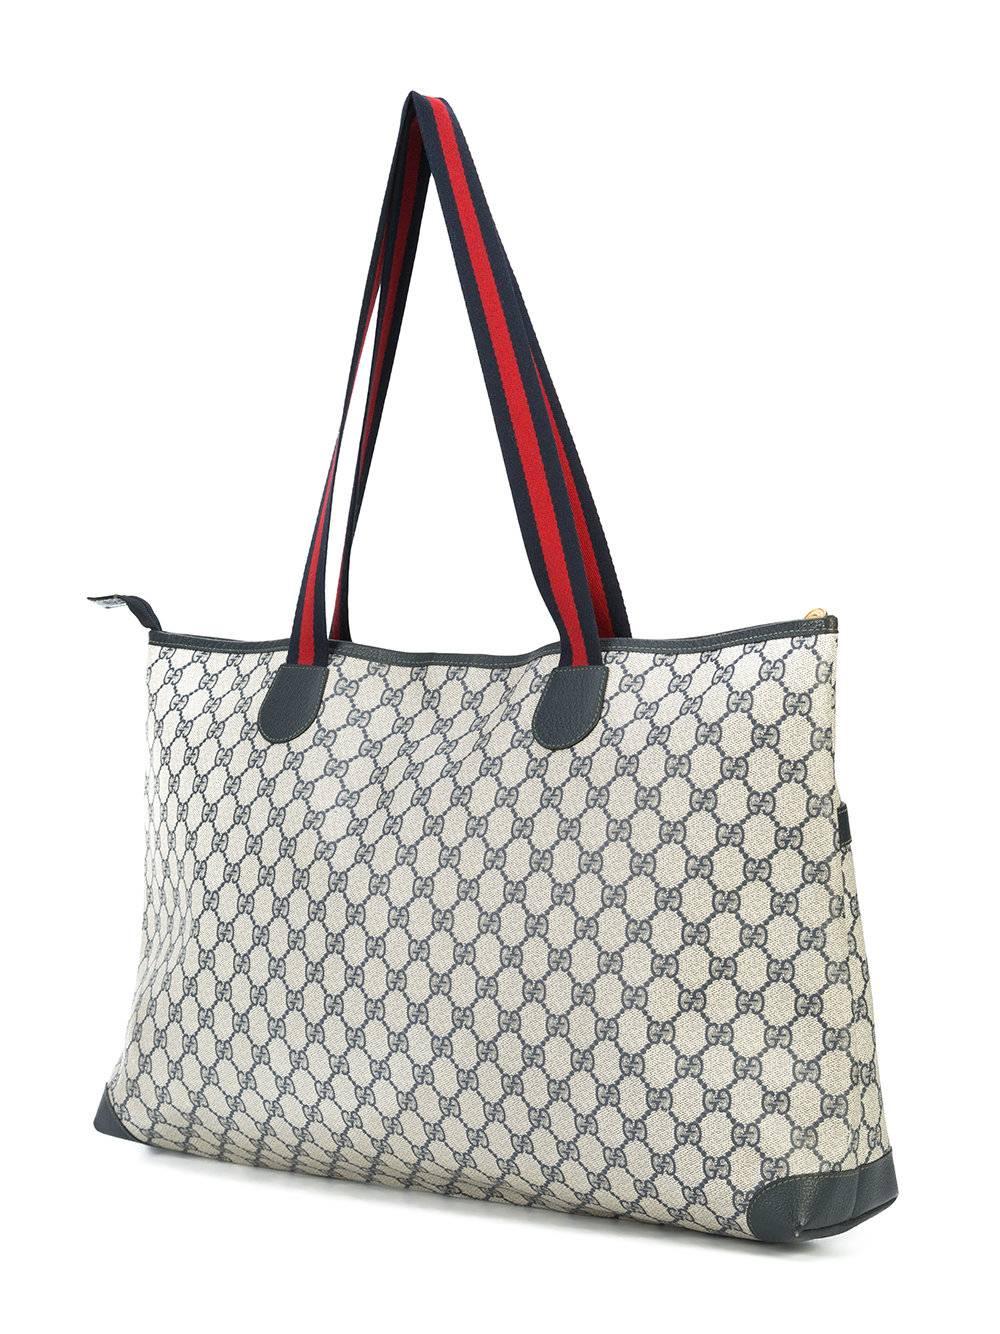 Gray Gucci GG Supreme Blue Red Jumbo Carryall Weekender Travel Shoulder Tote Bag